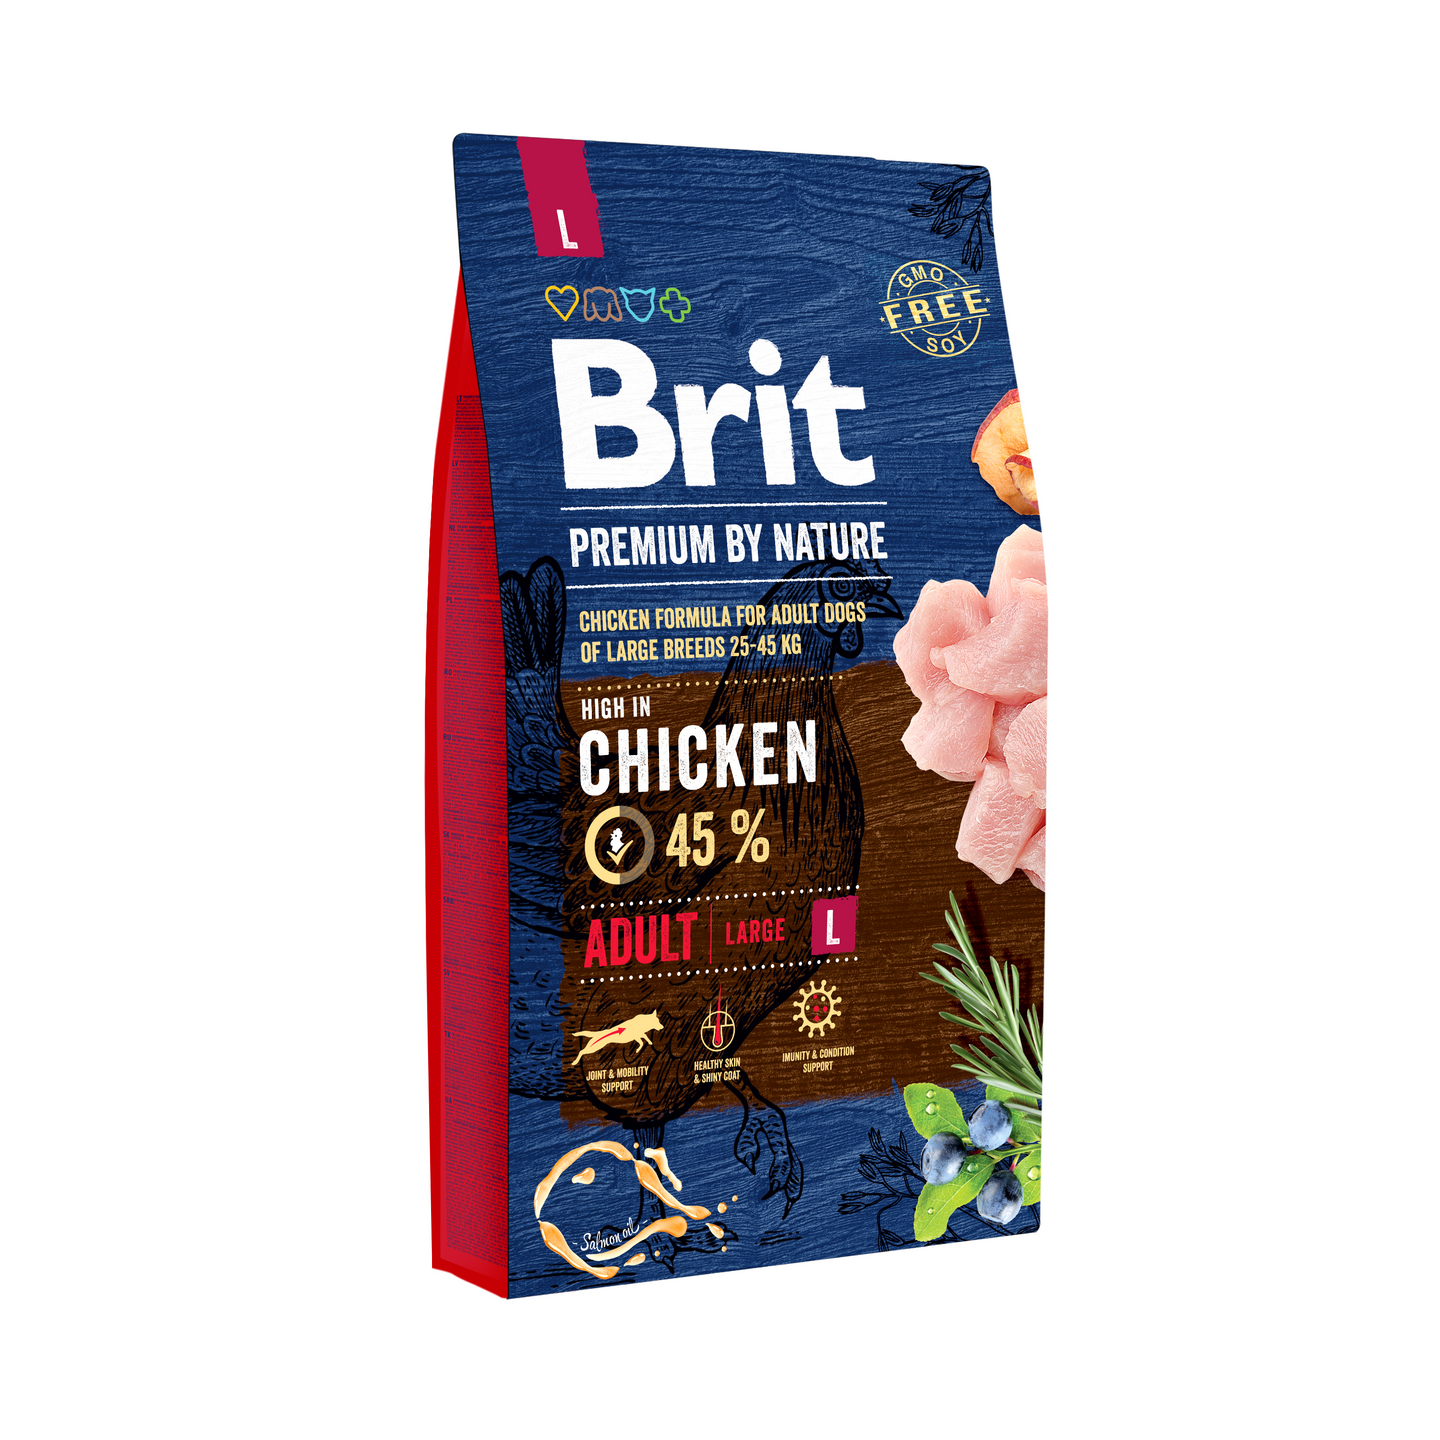 Brit Premium by Nature Adult L isojen rotujen aikuisille koirille 8 kg